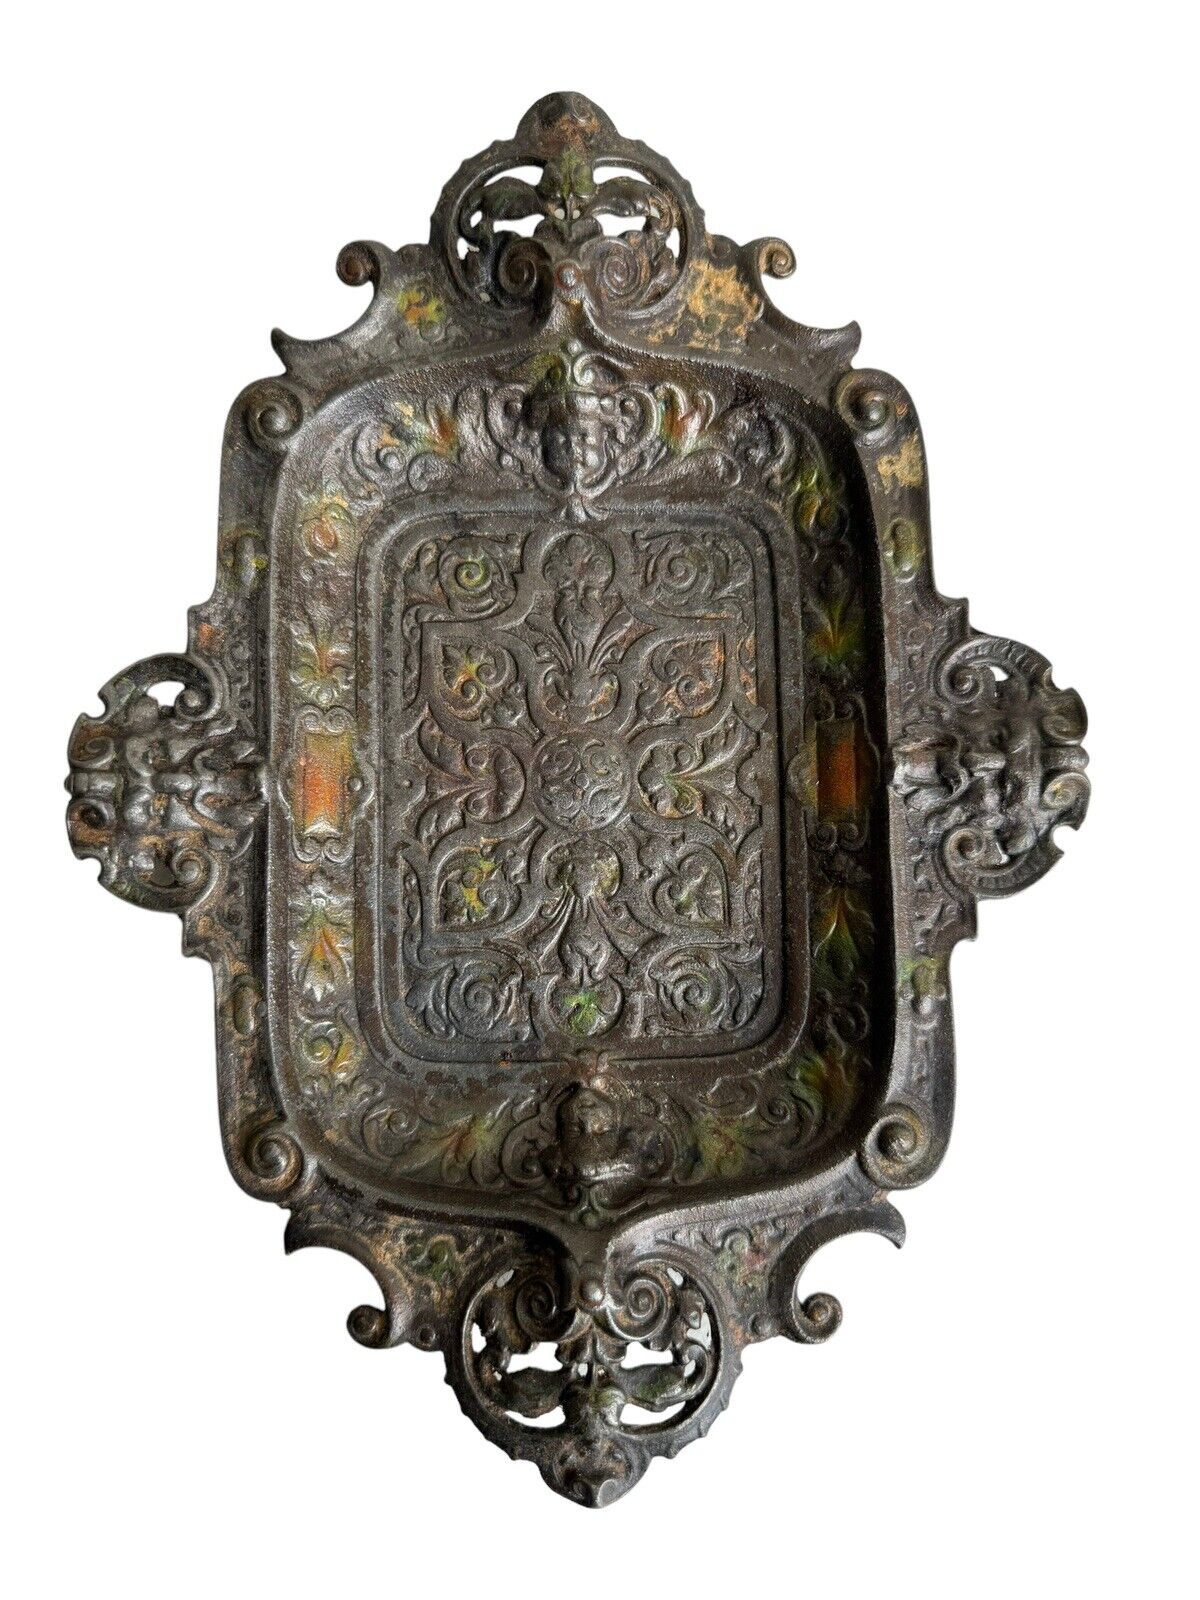 Antique Ornate Cast Iron  Shallow Bowl Cherub Faces High Relief Artwork